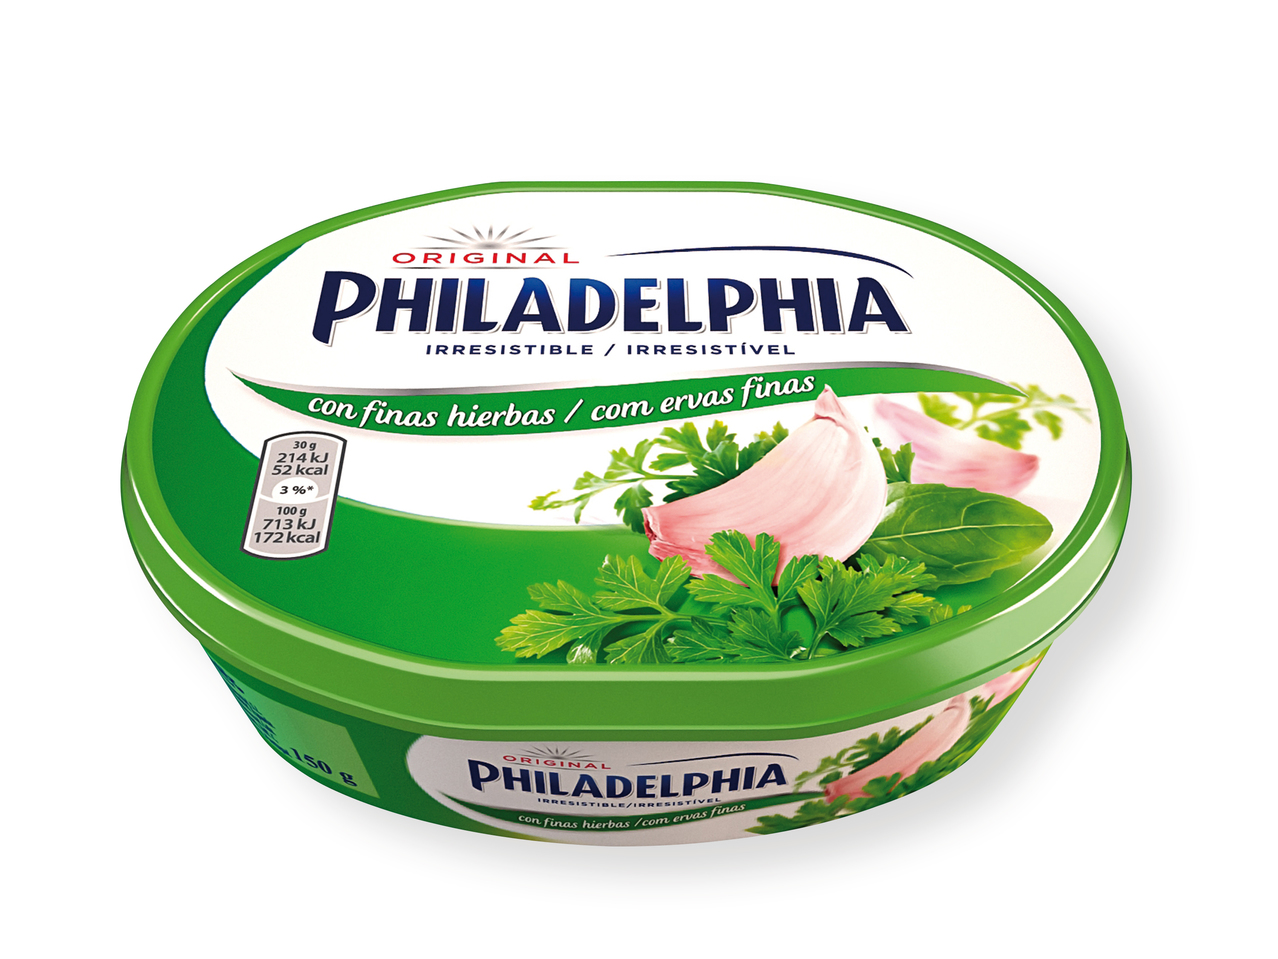 "Philadelphia" Crema de queso